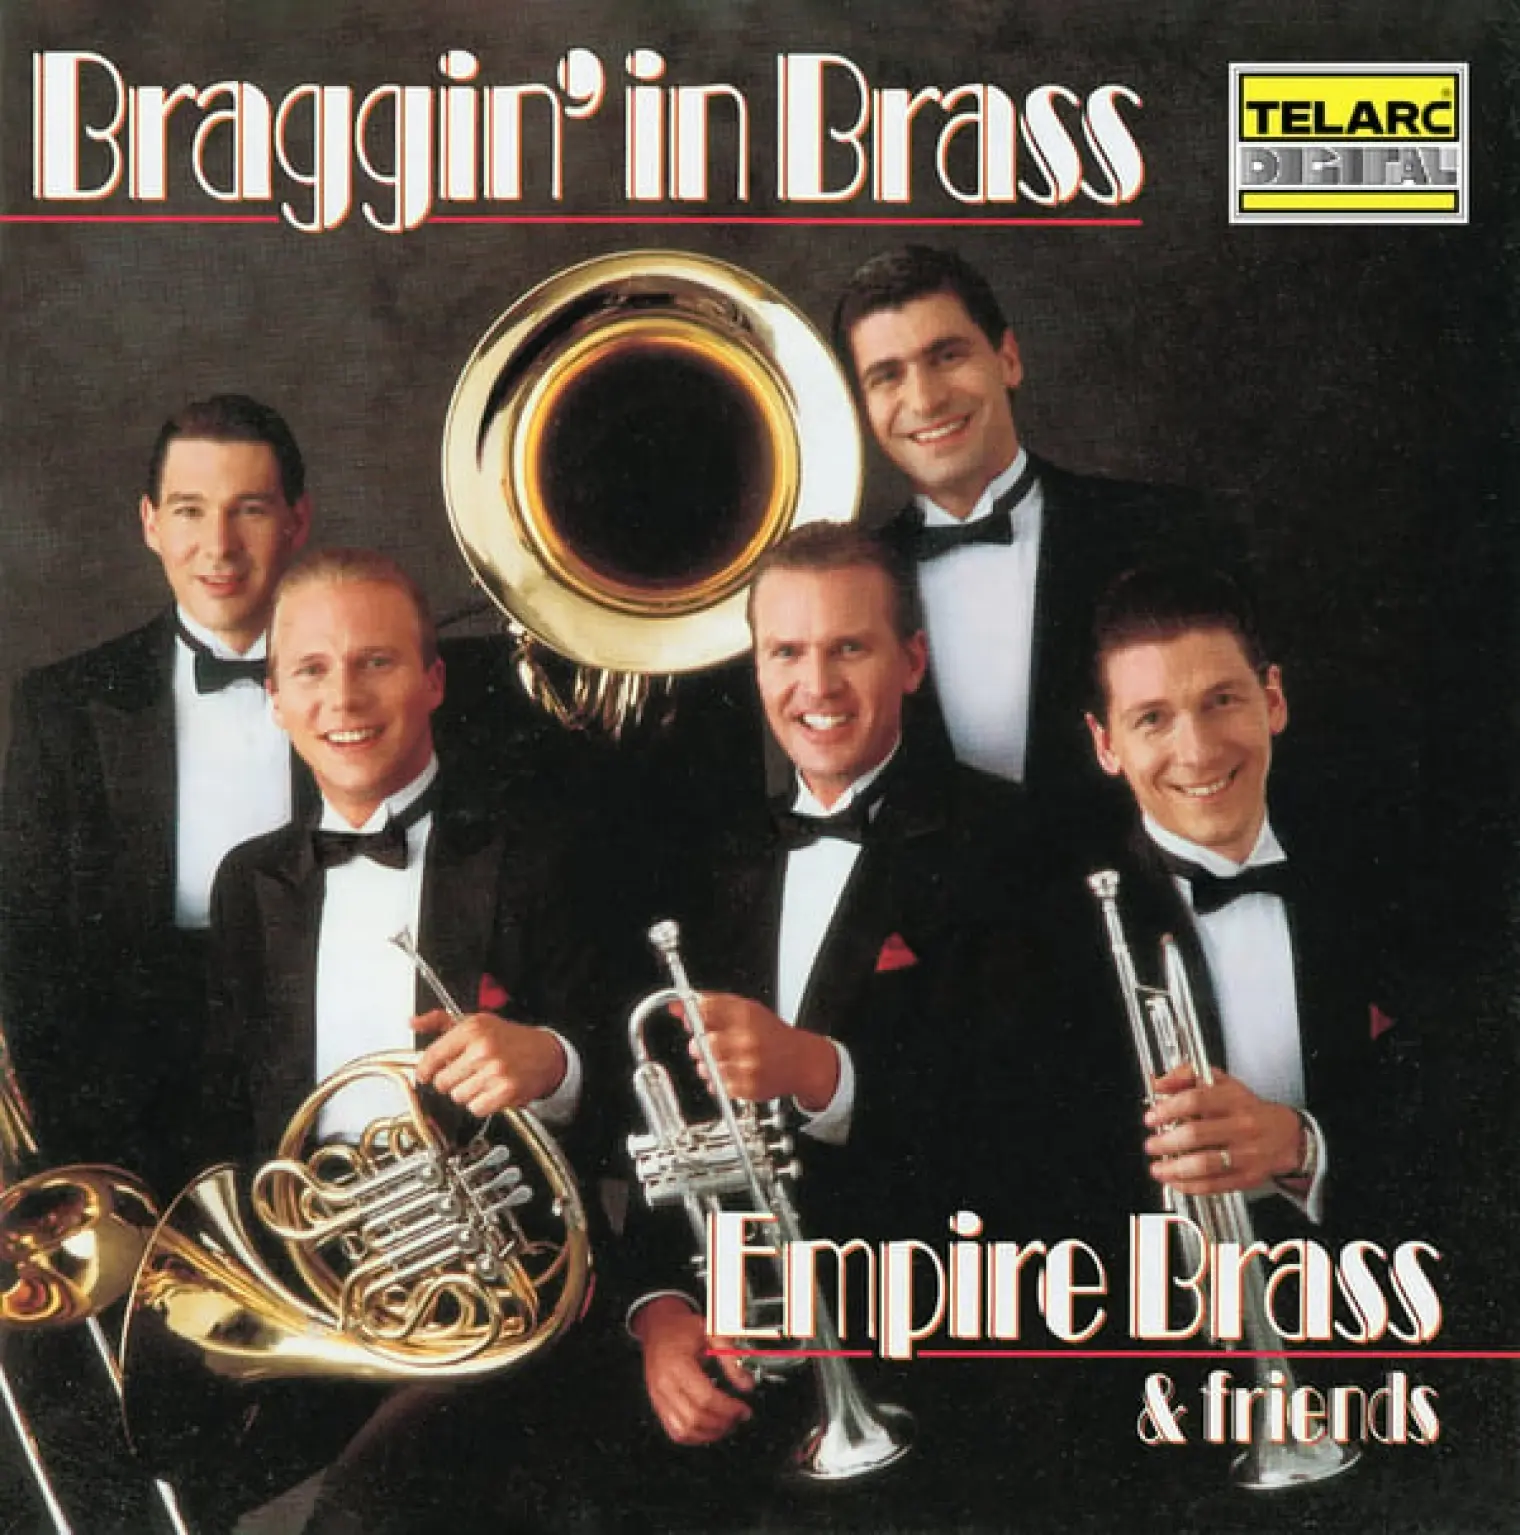 Braggin' In Brass: Music Of Duke Ellington & Others -  Empire Brass 